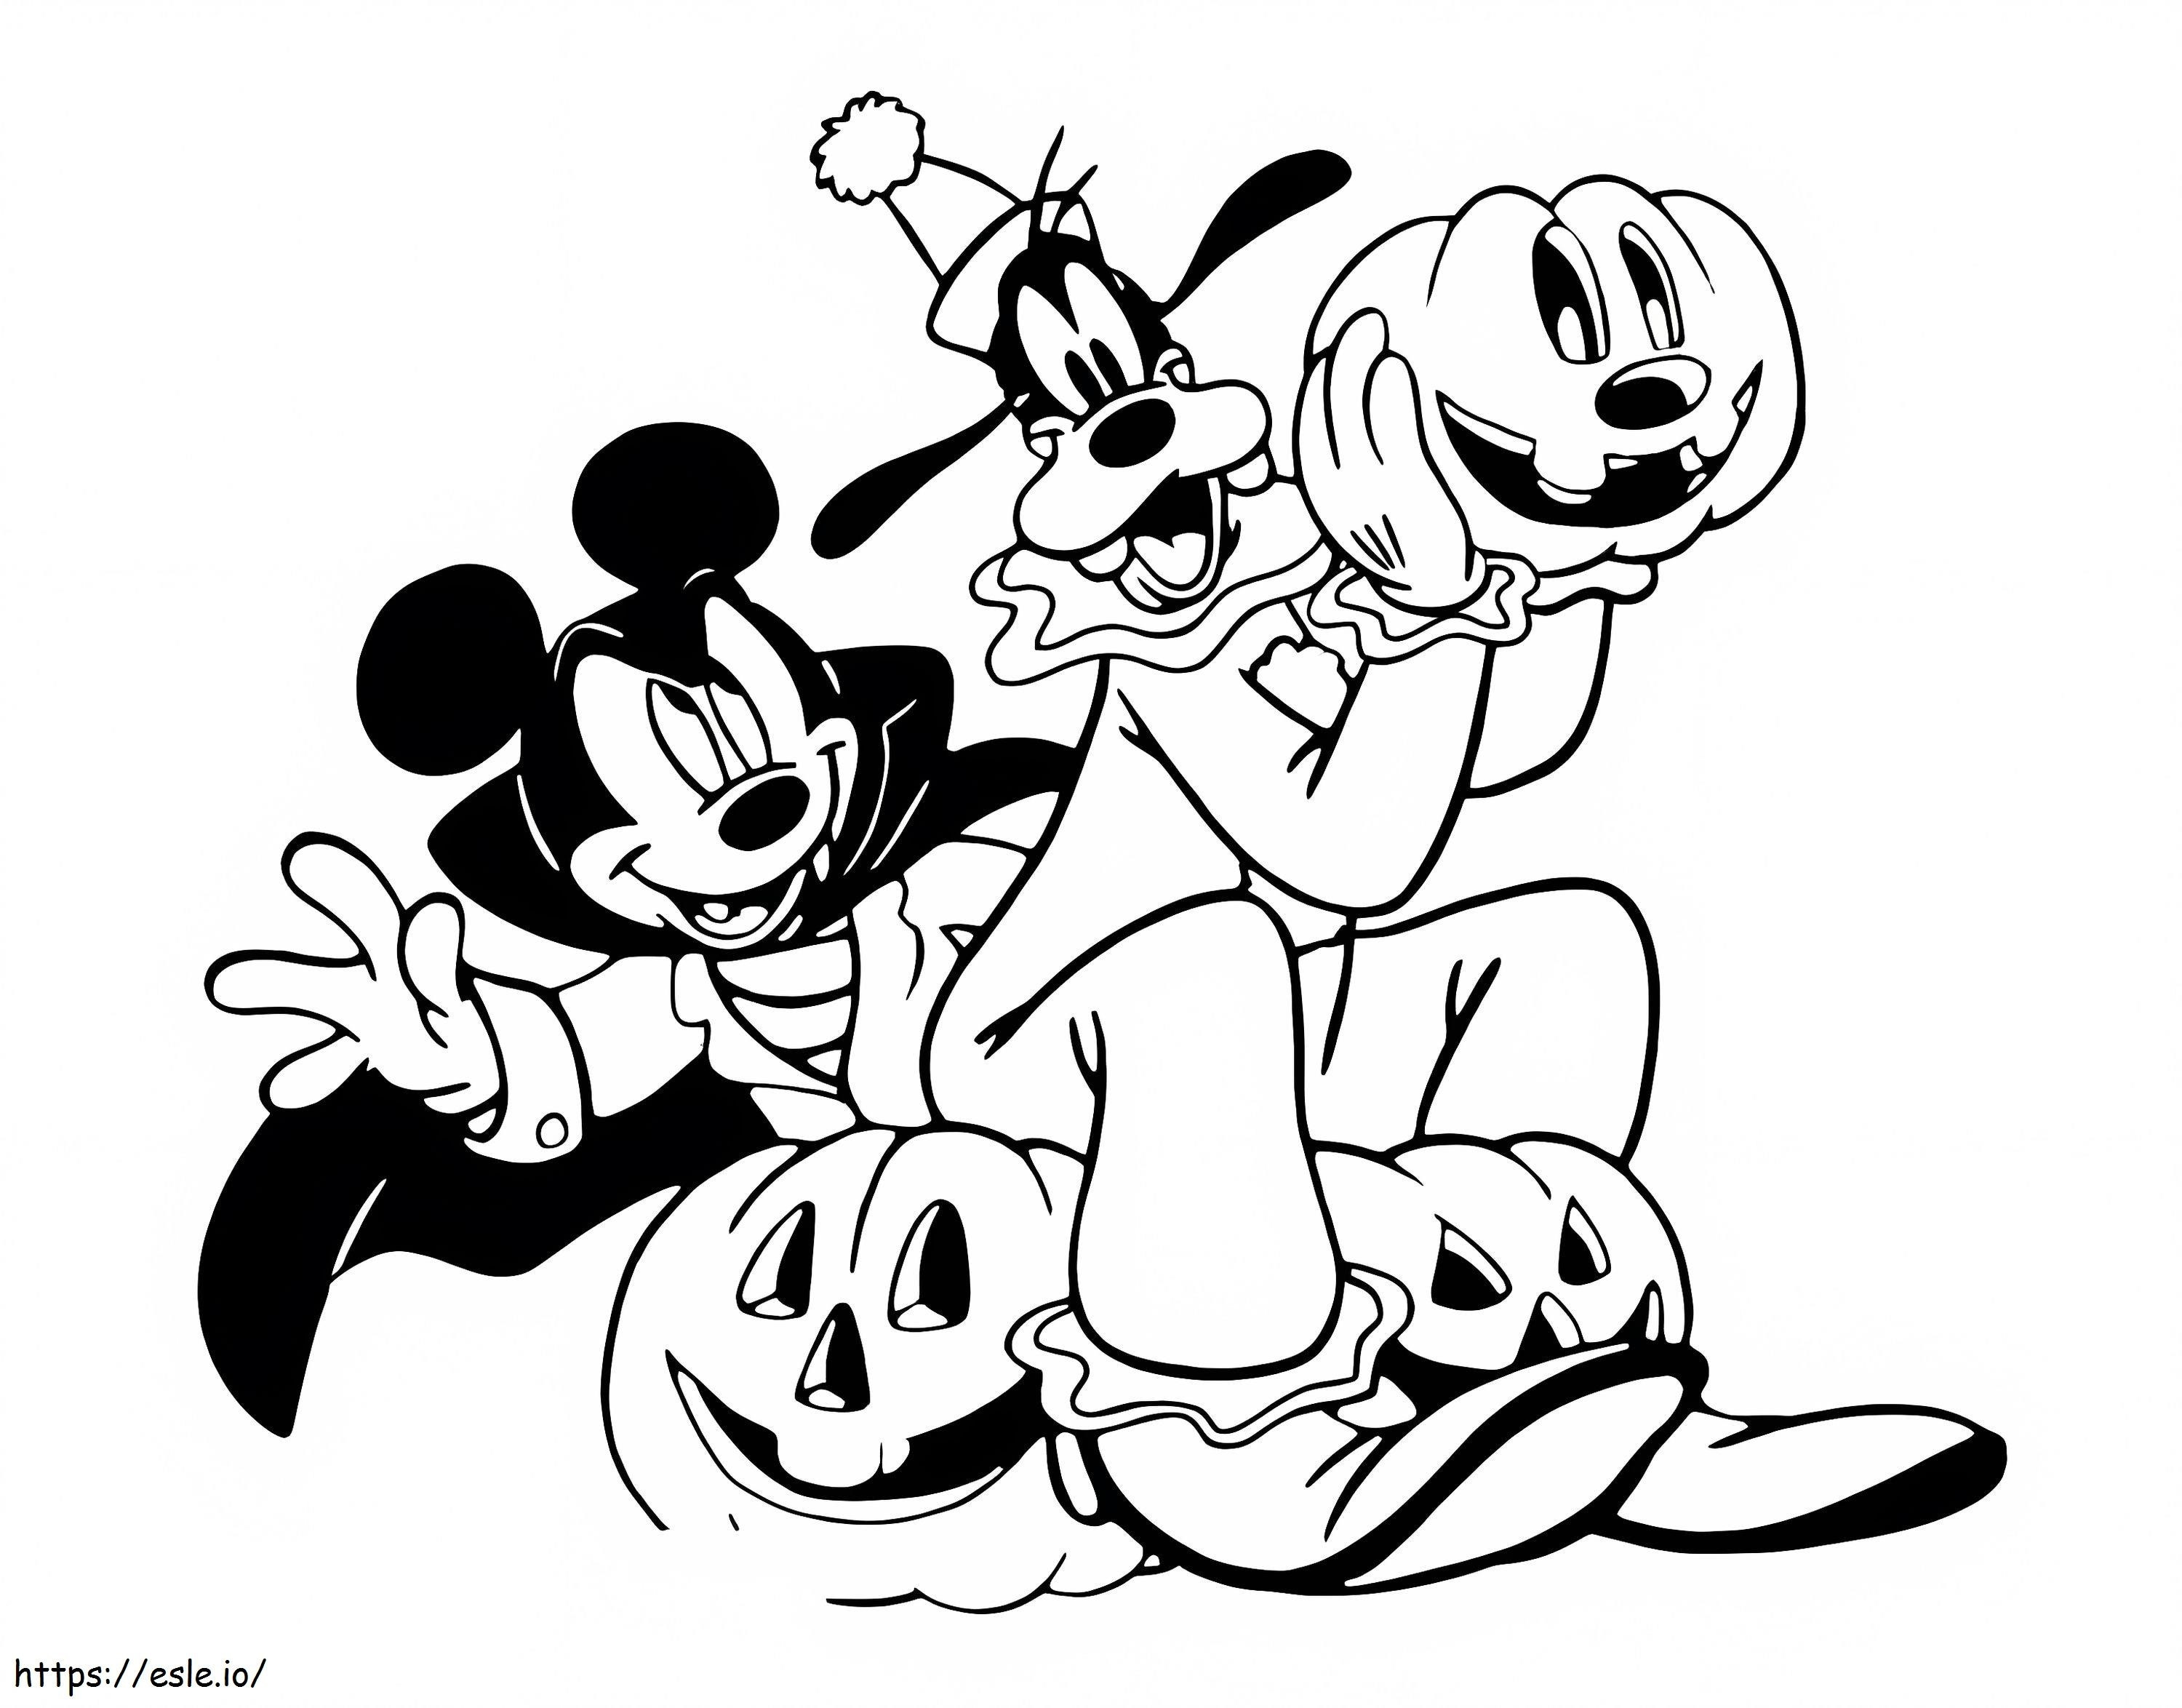 Mickey ve Goofy Cadılar Bayramında boyama